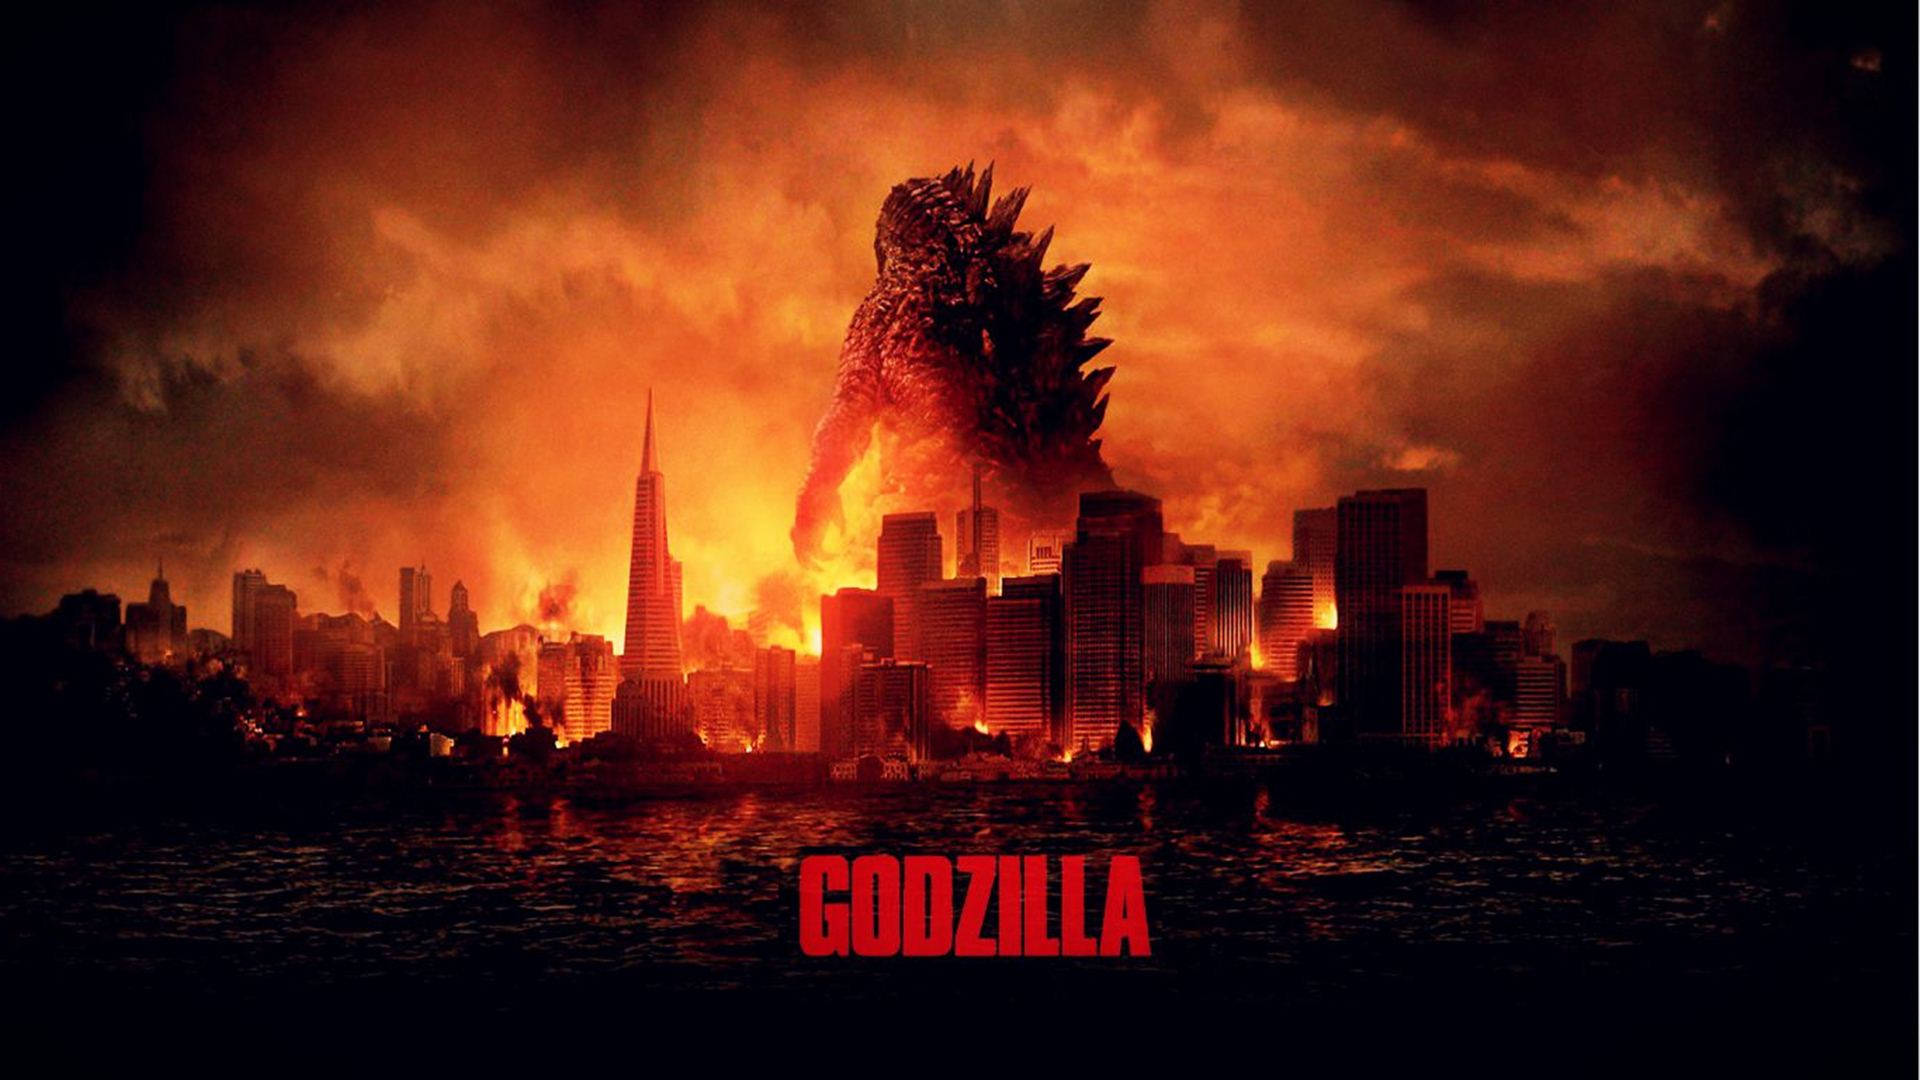 The destructive Godzilla wreaks havoc on a burning megacity. Wallpaper